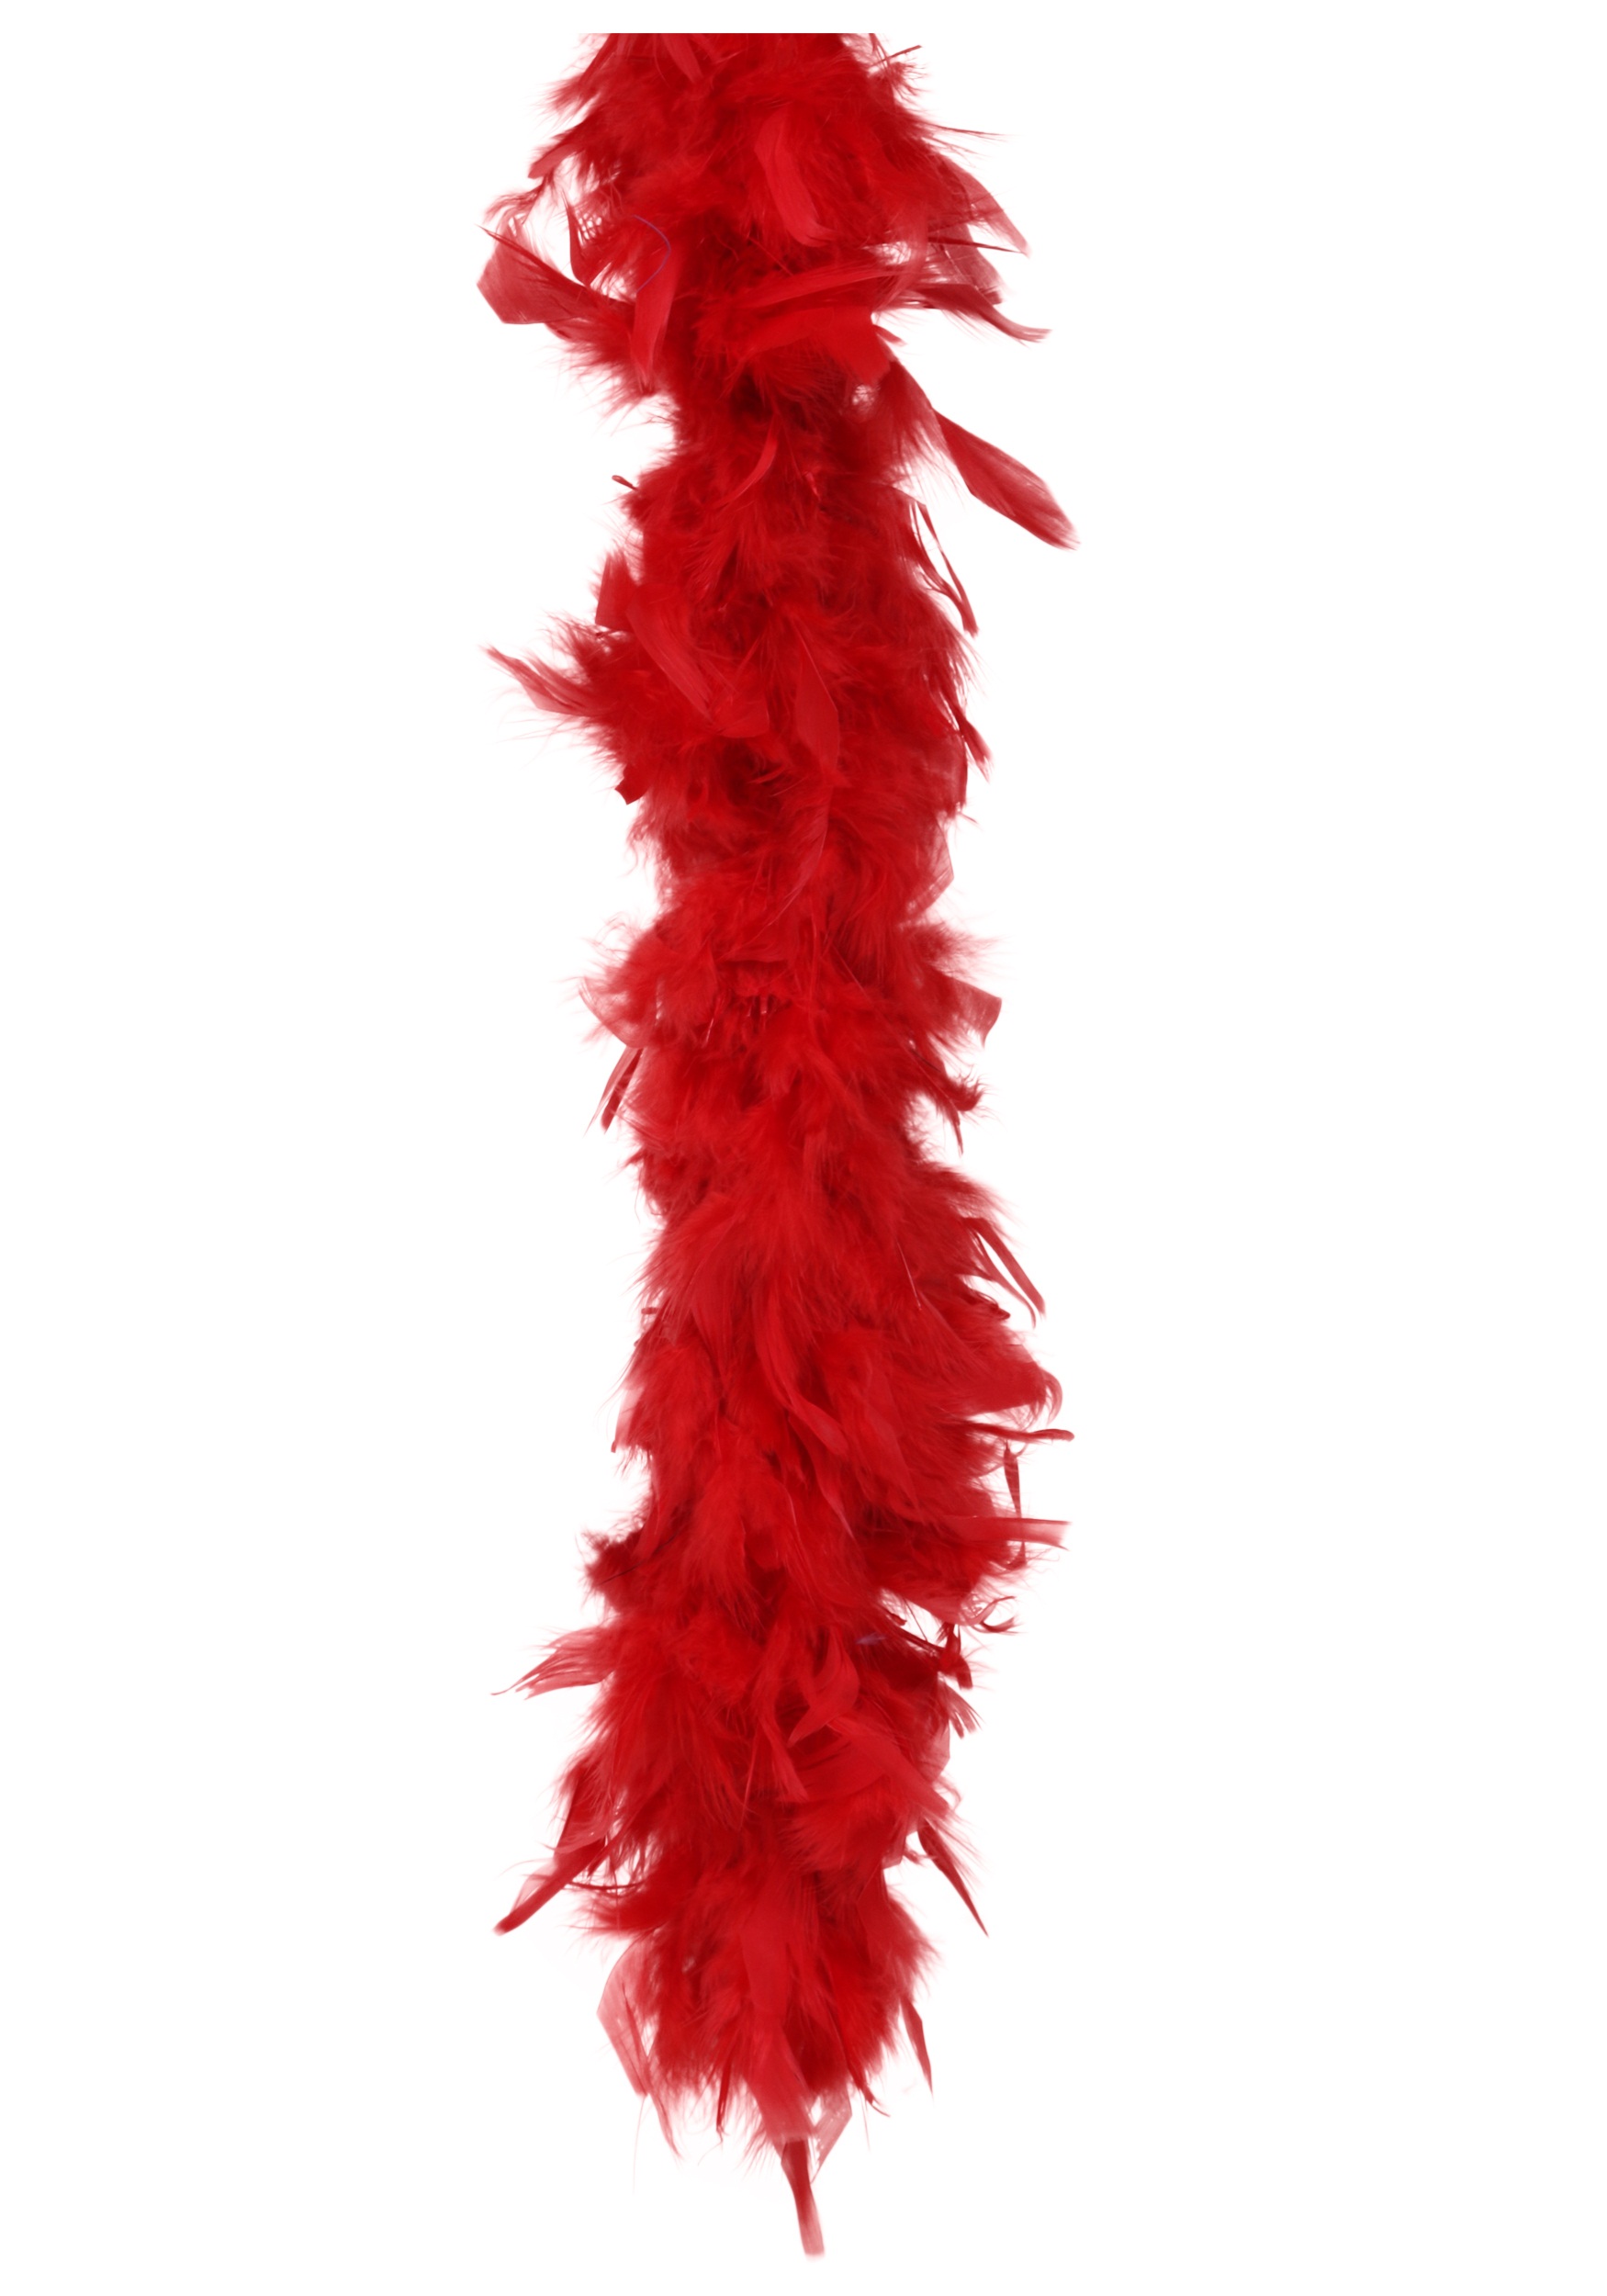 SUPER Sized Featherless Boa - Mardi Gras